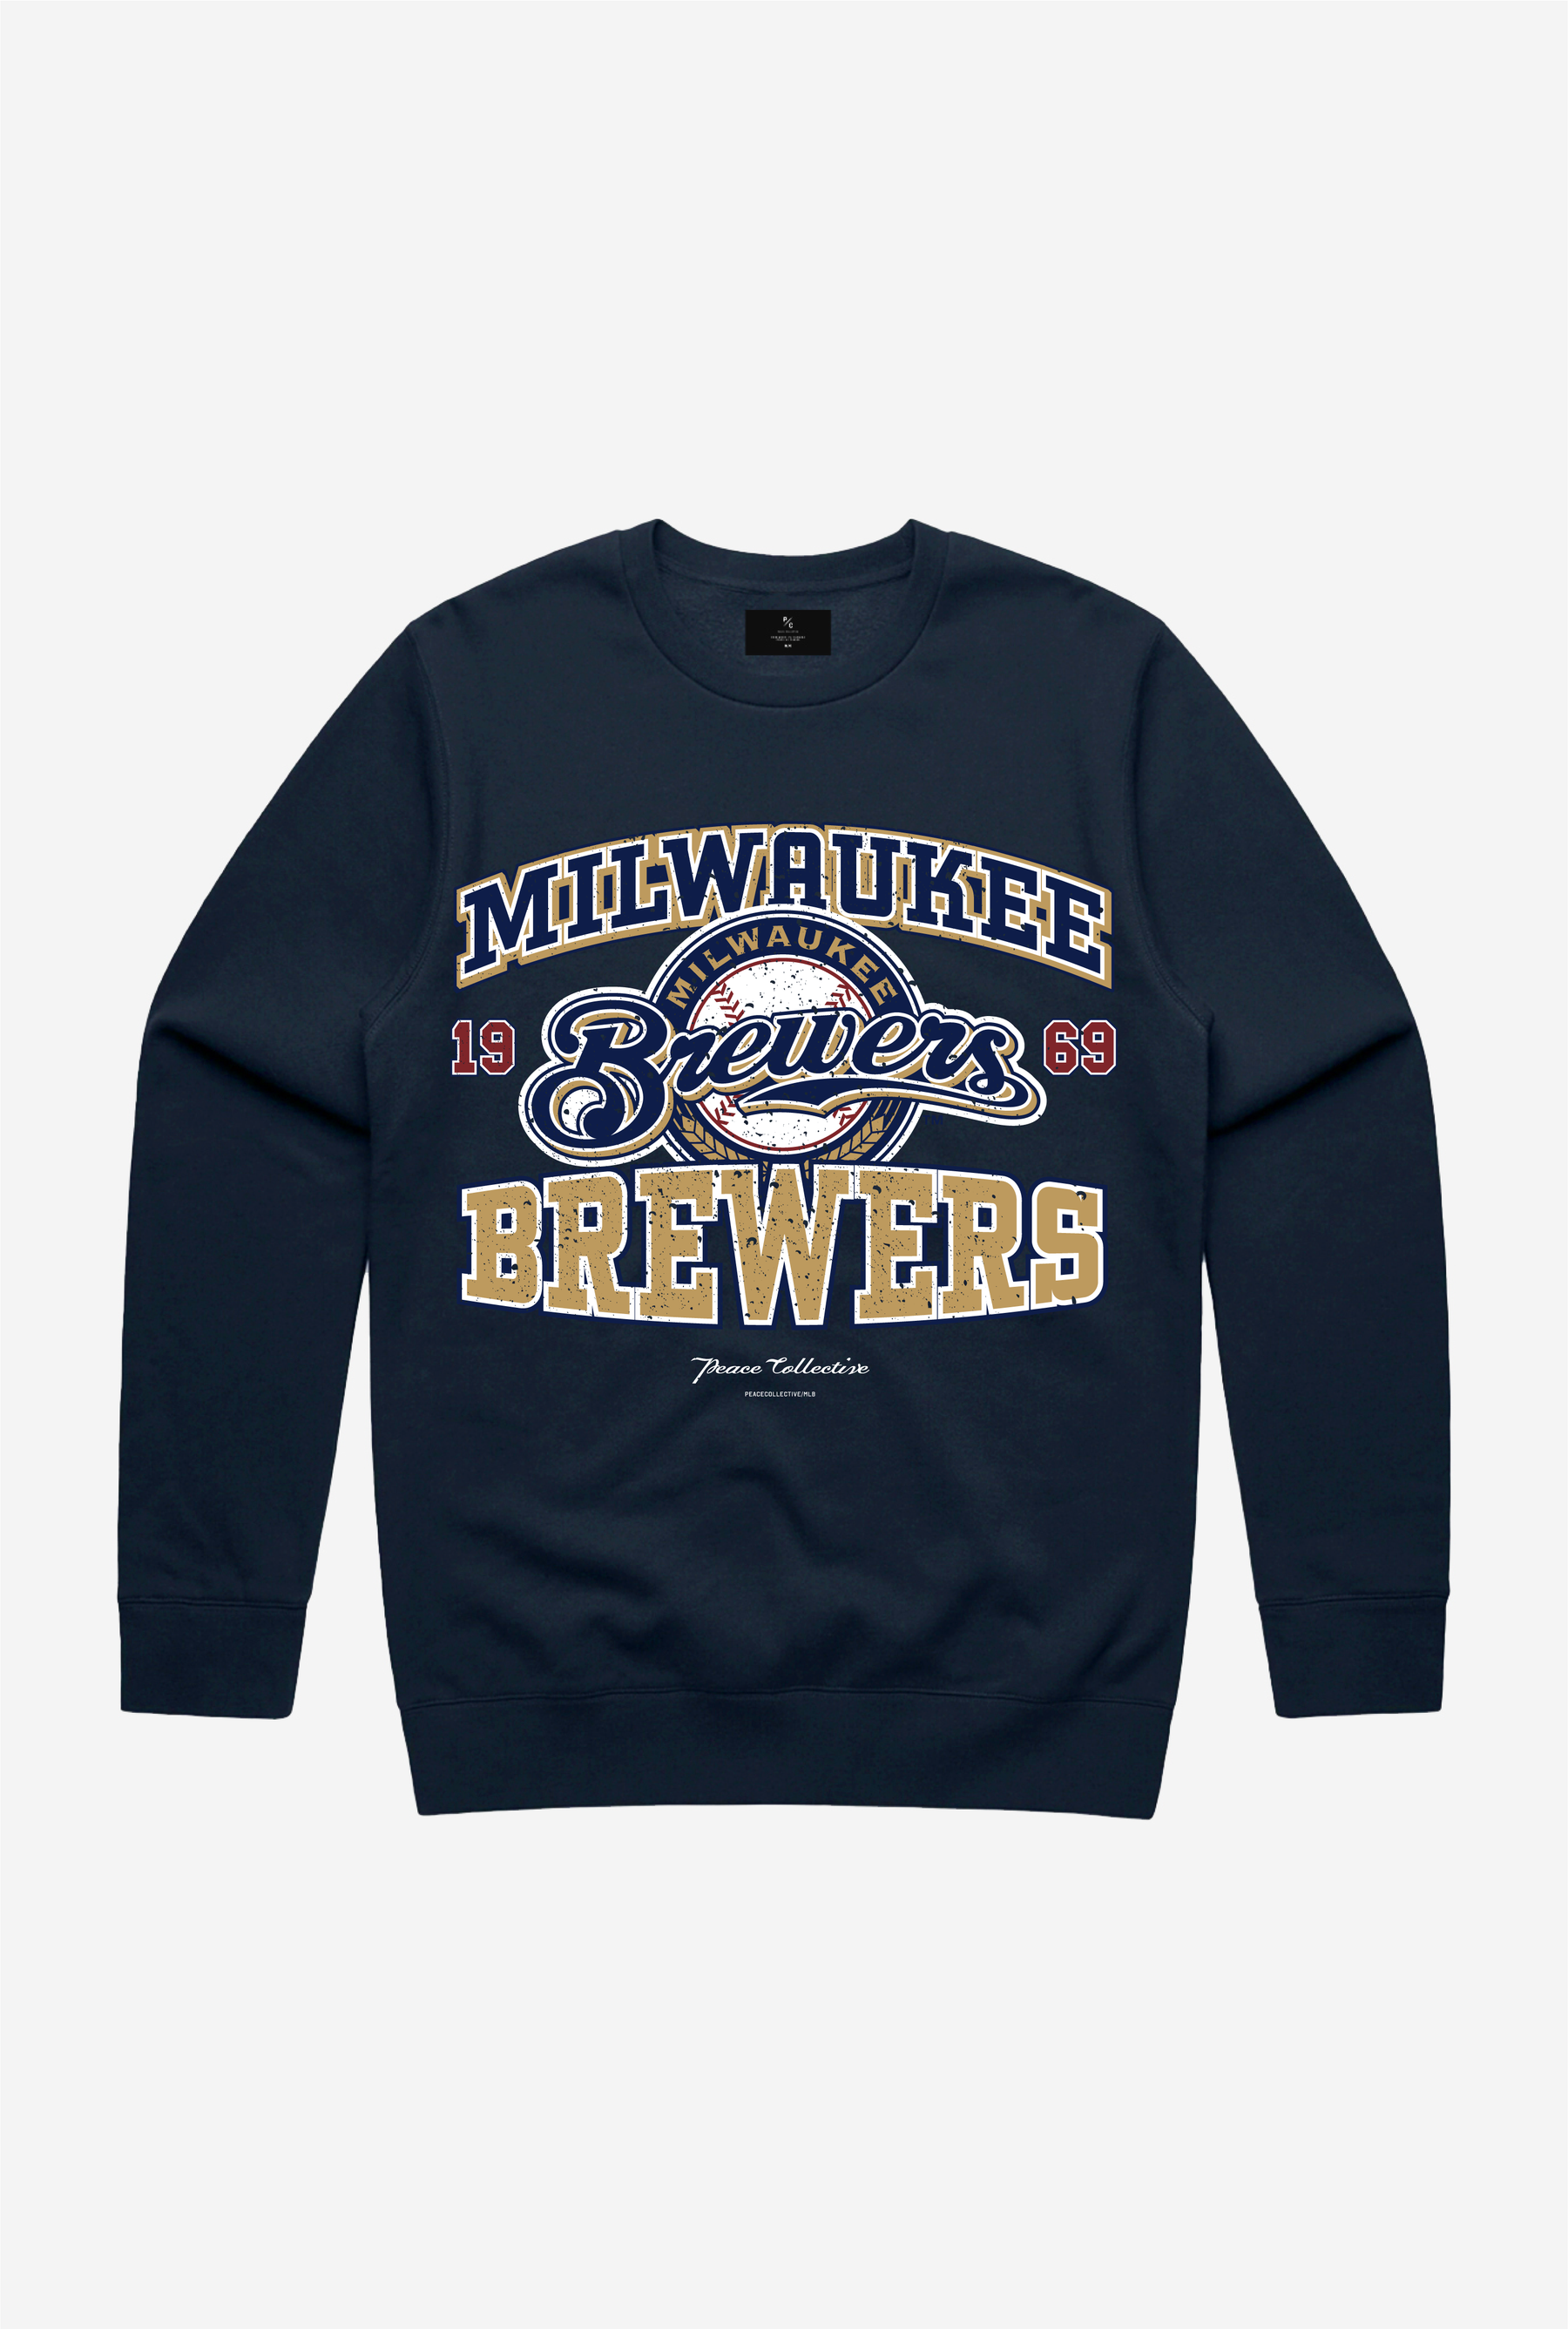 Milwaukee Brewers Vintage Washed Crewneck - Navy